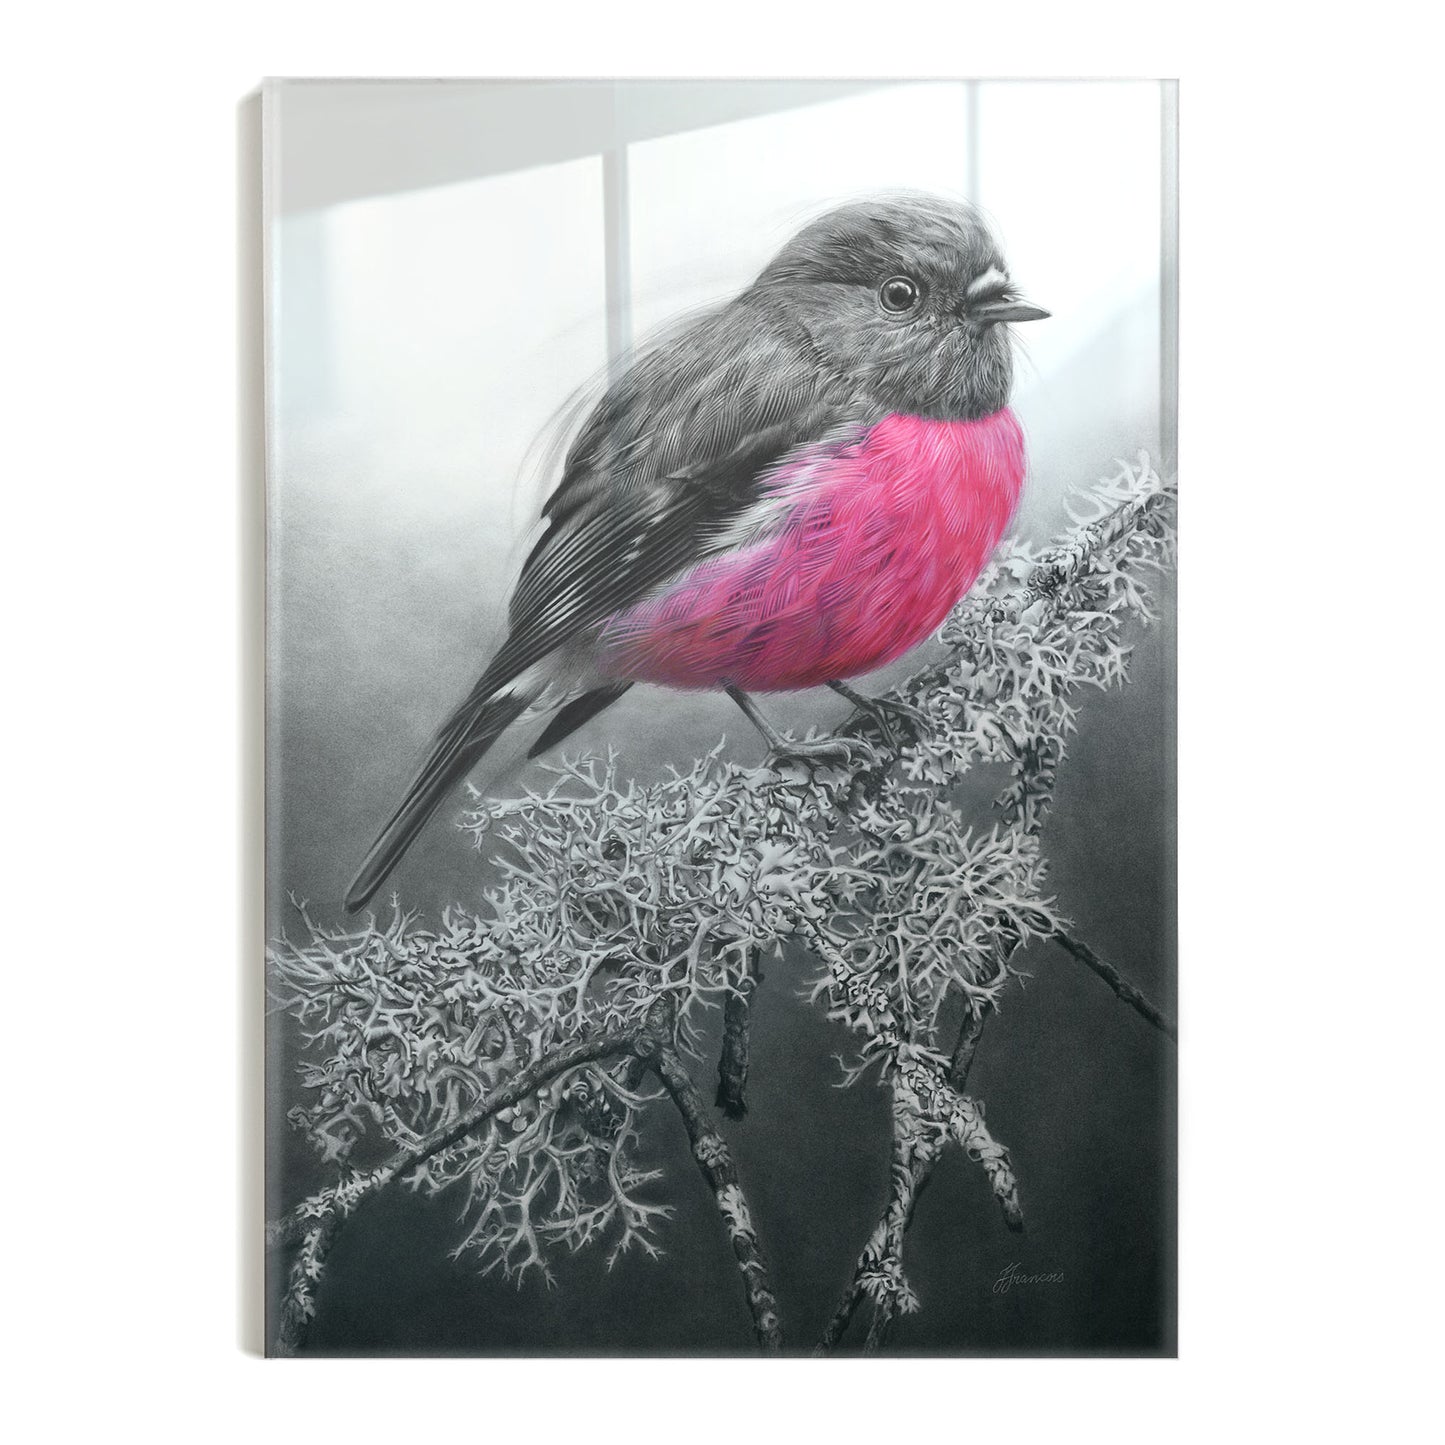 'Pink Robin' acrylic print